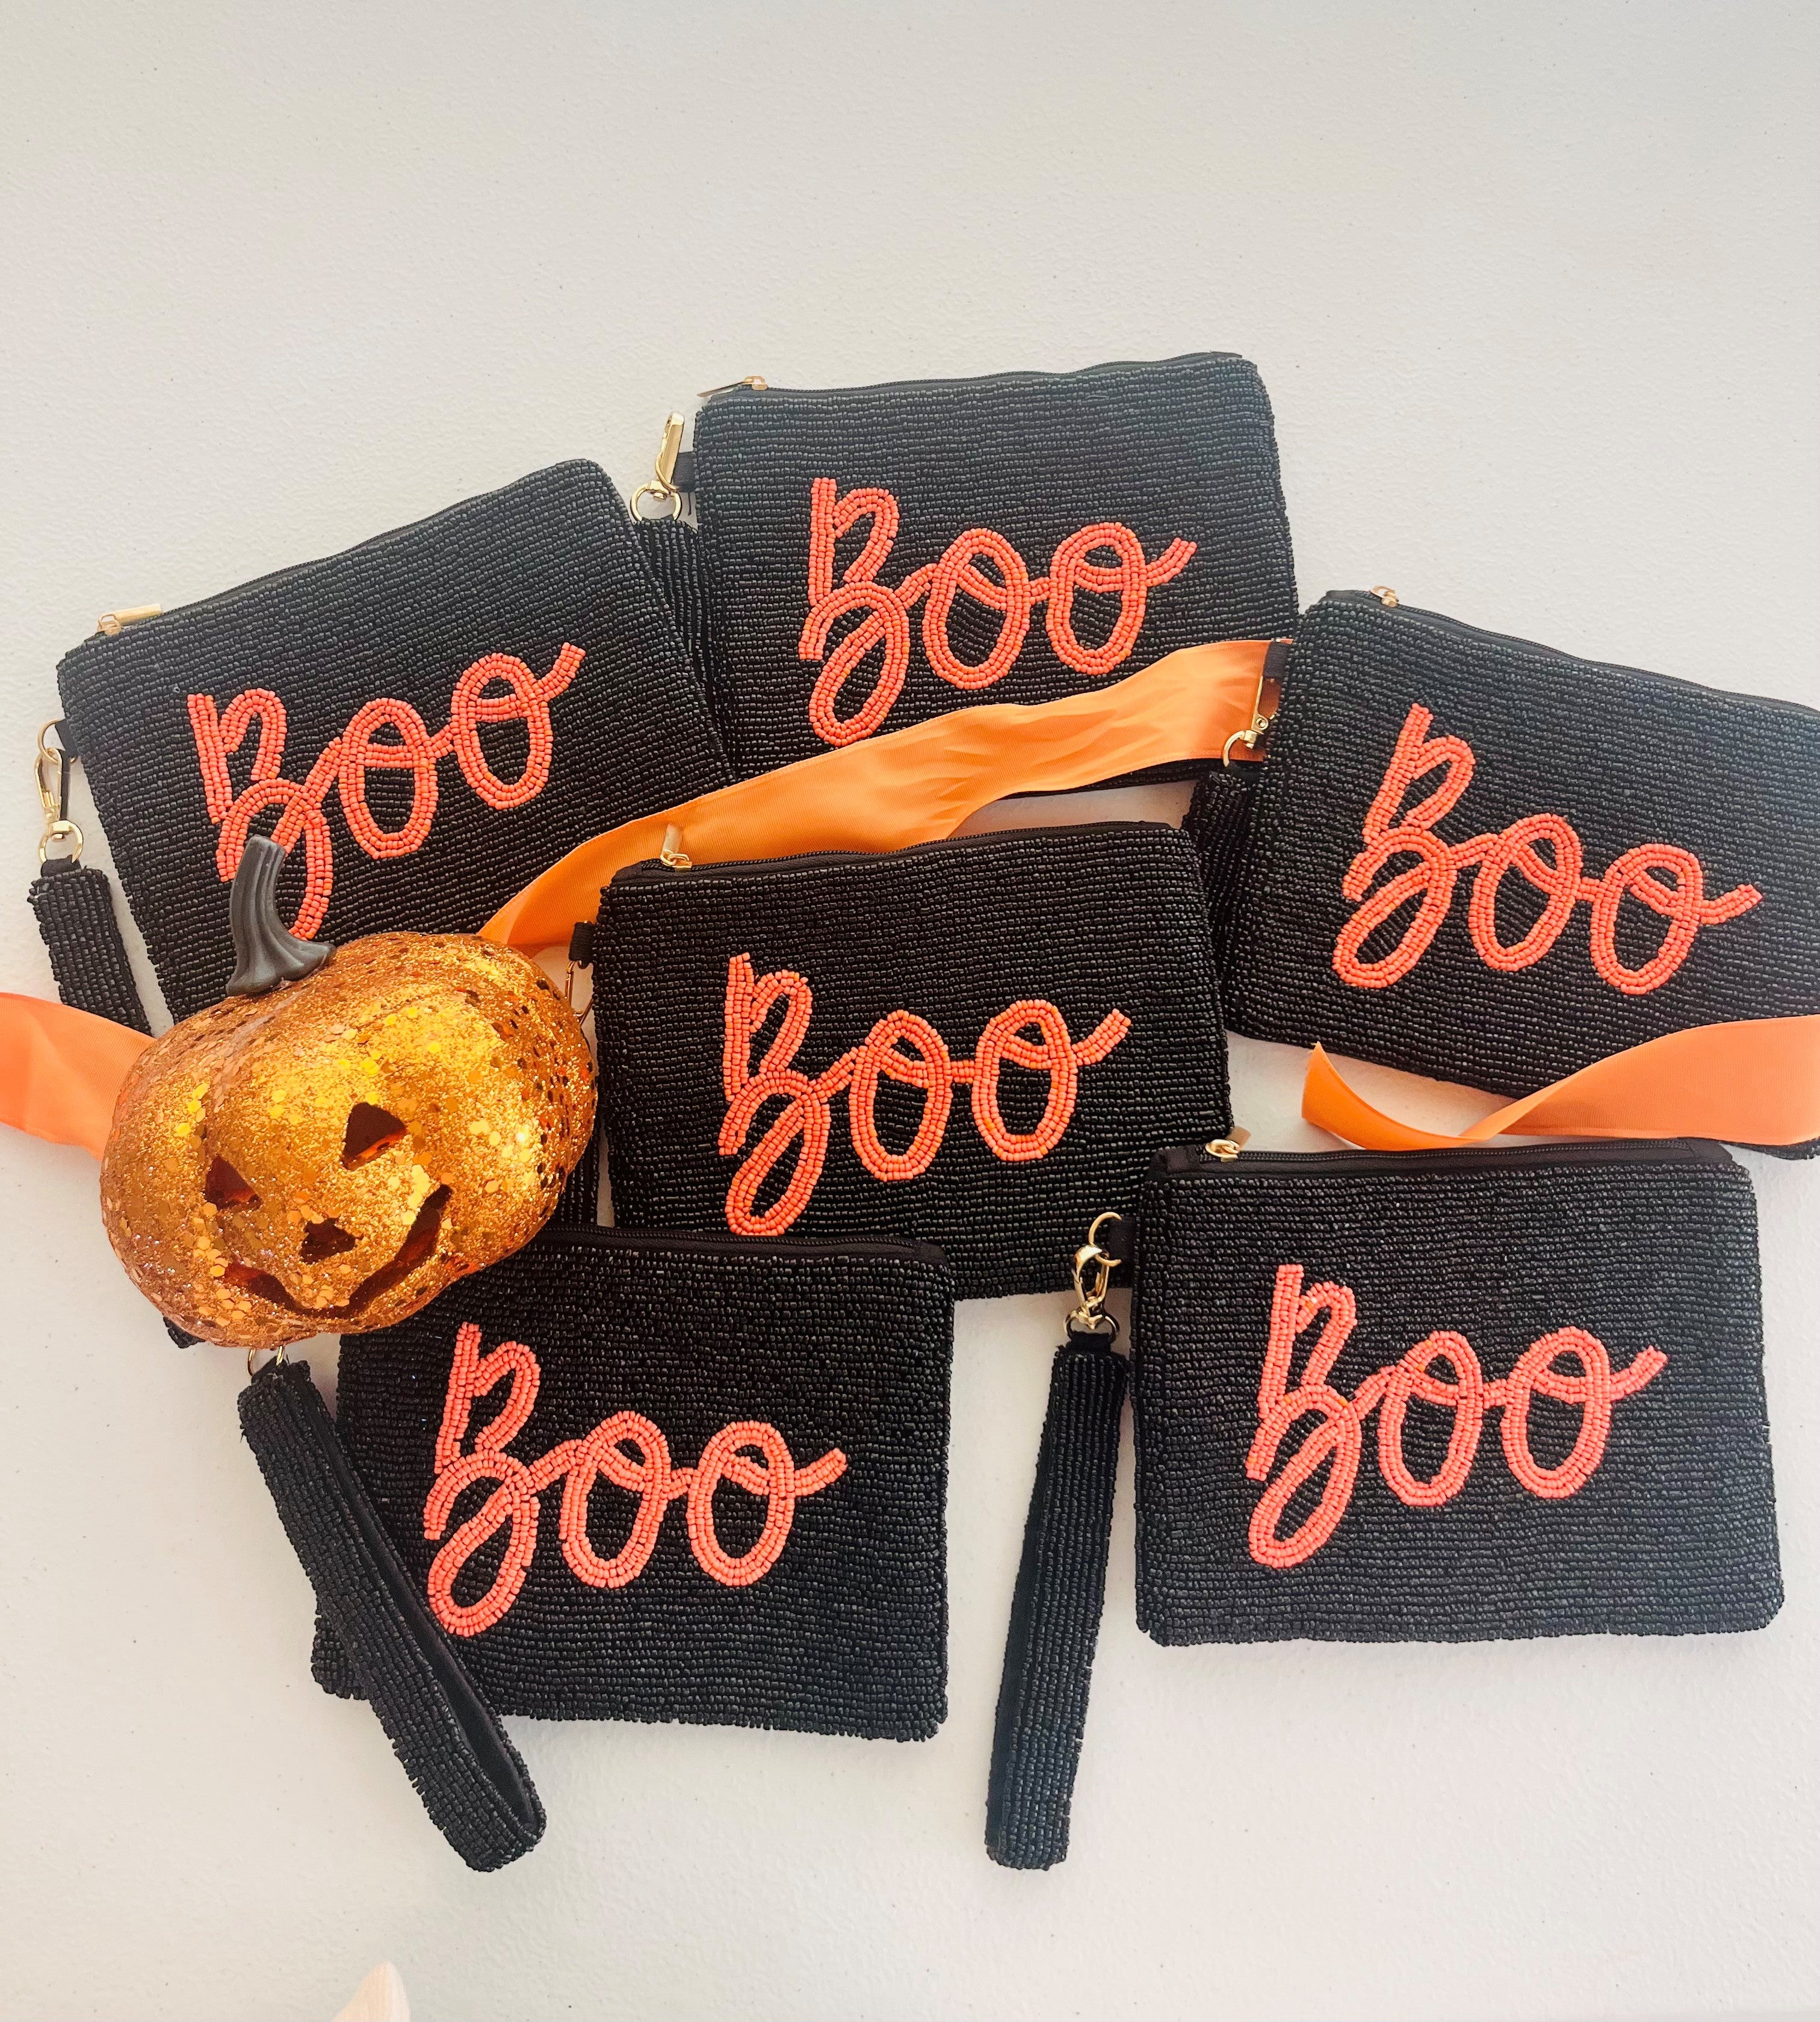 Boo Gift For Her, Halloween Beaded Wristlet